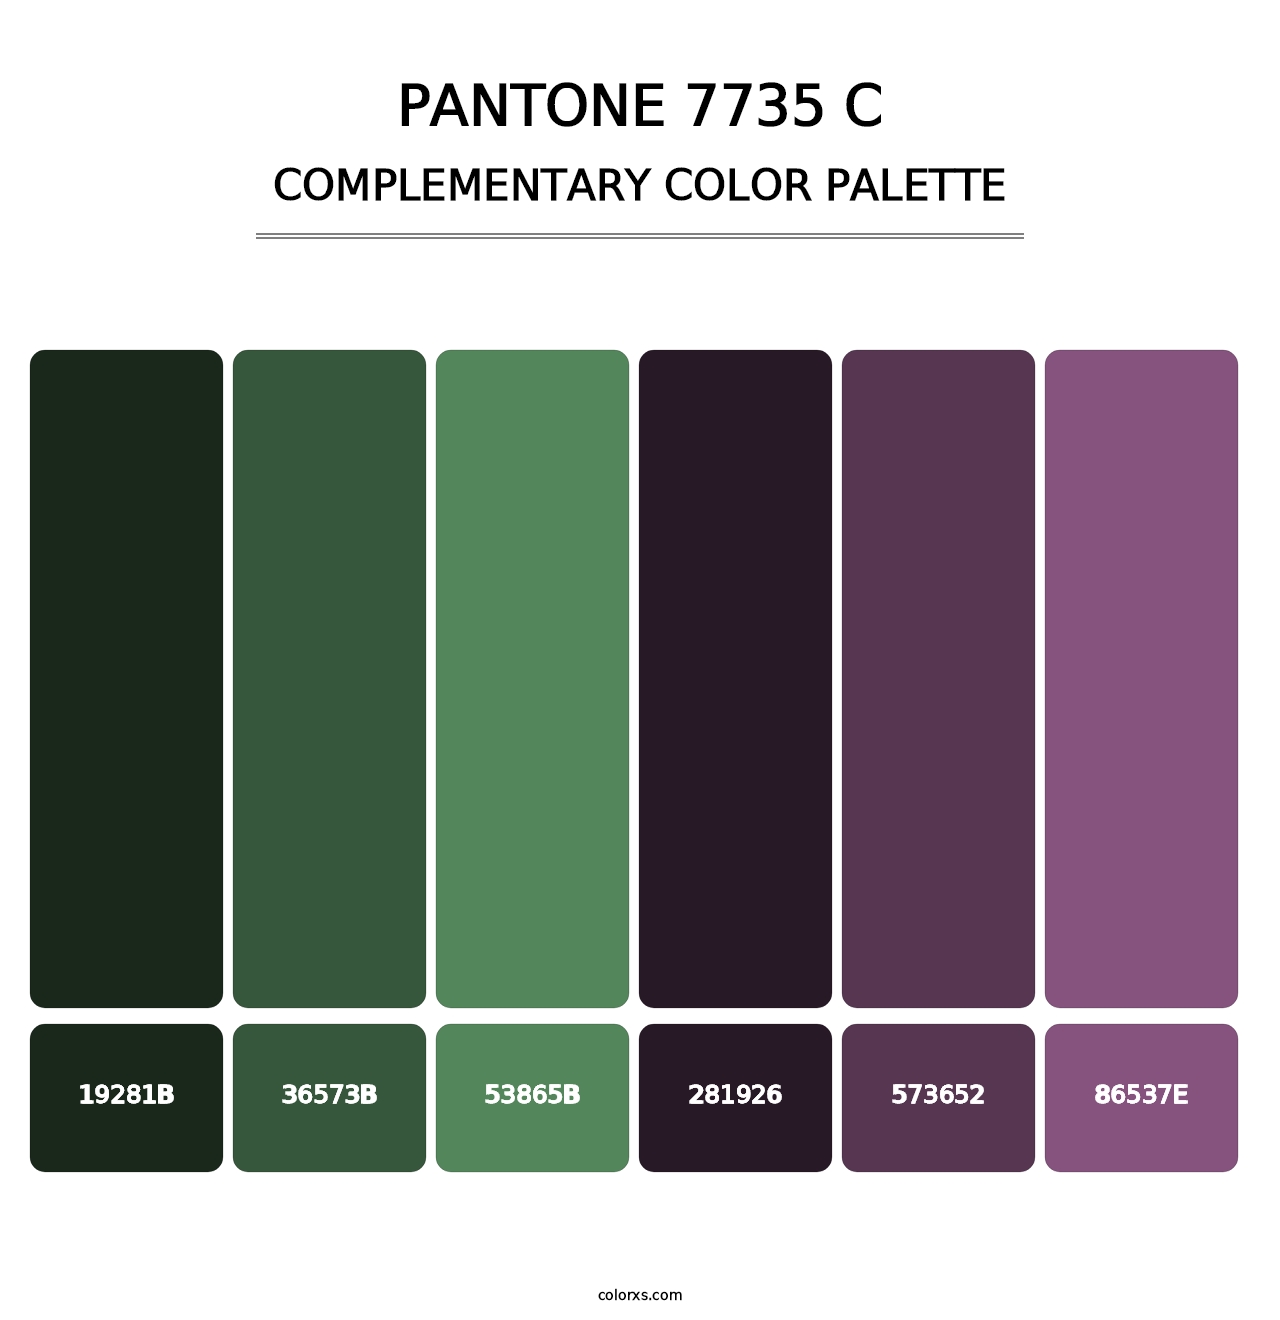 PANTONE 7735 C - Complementary Color Palette